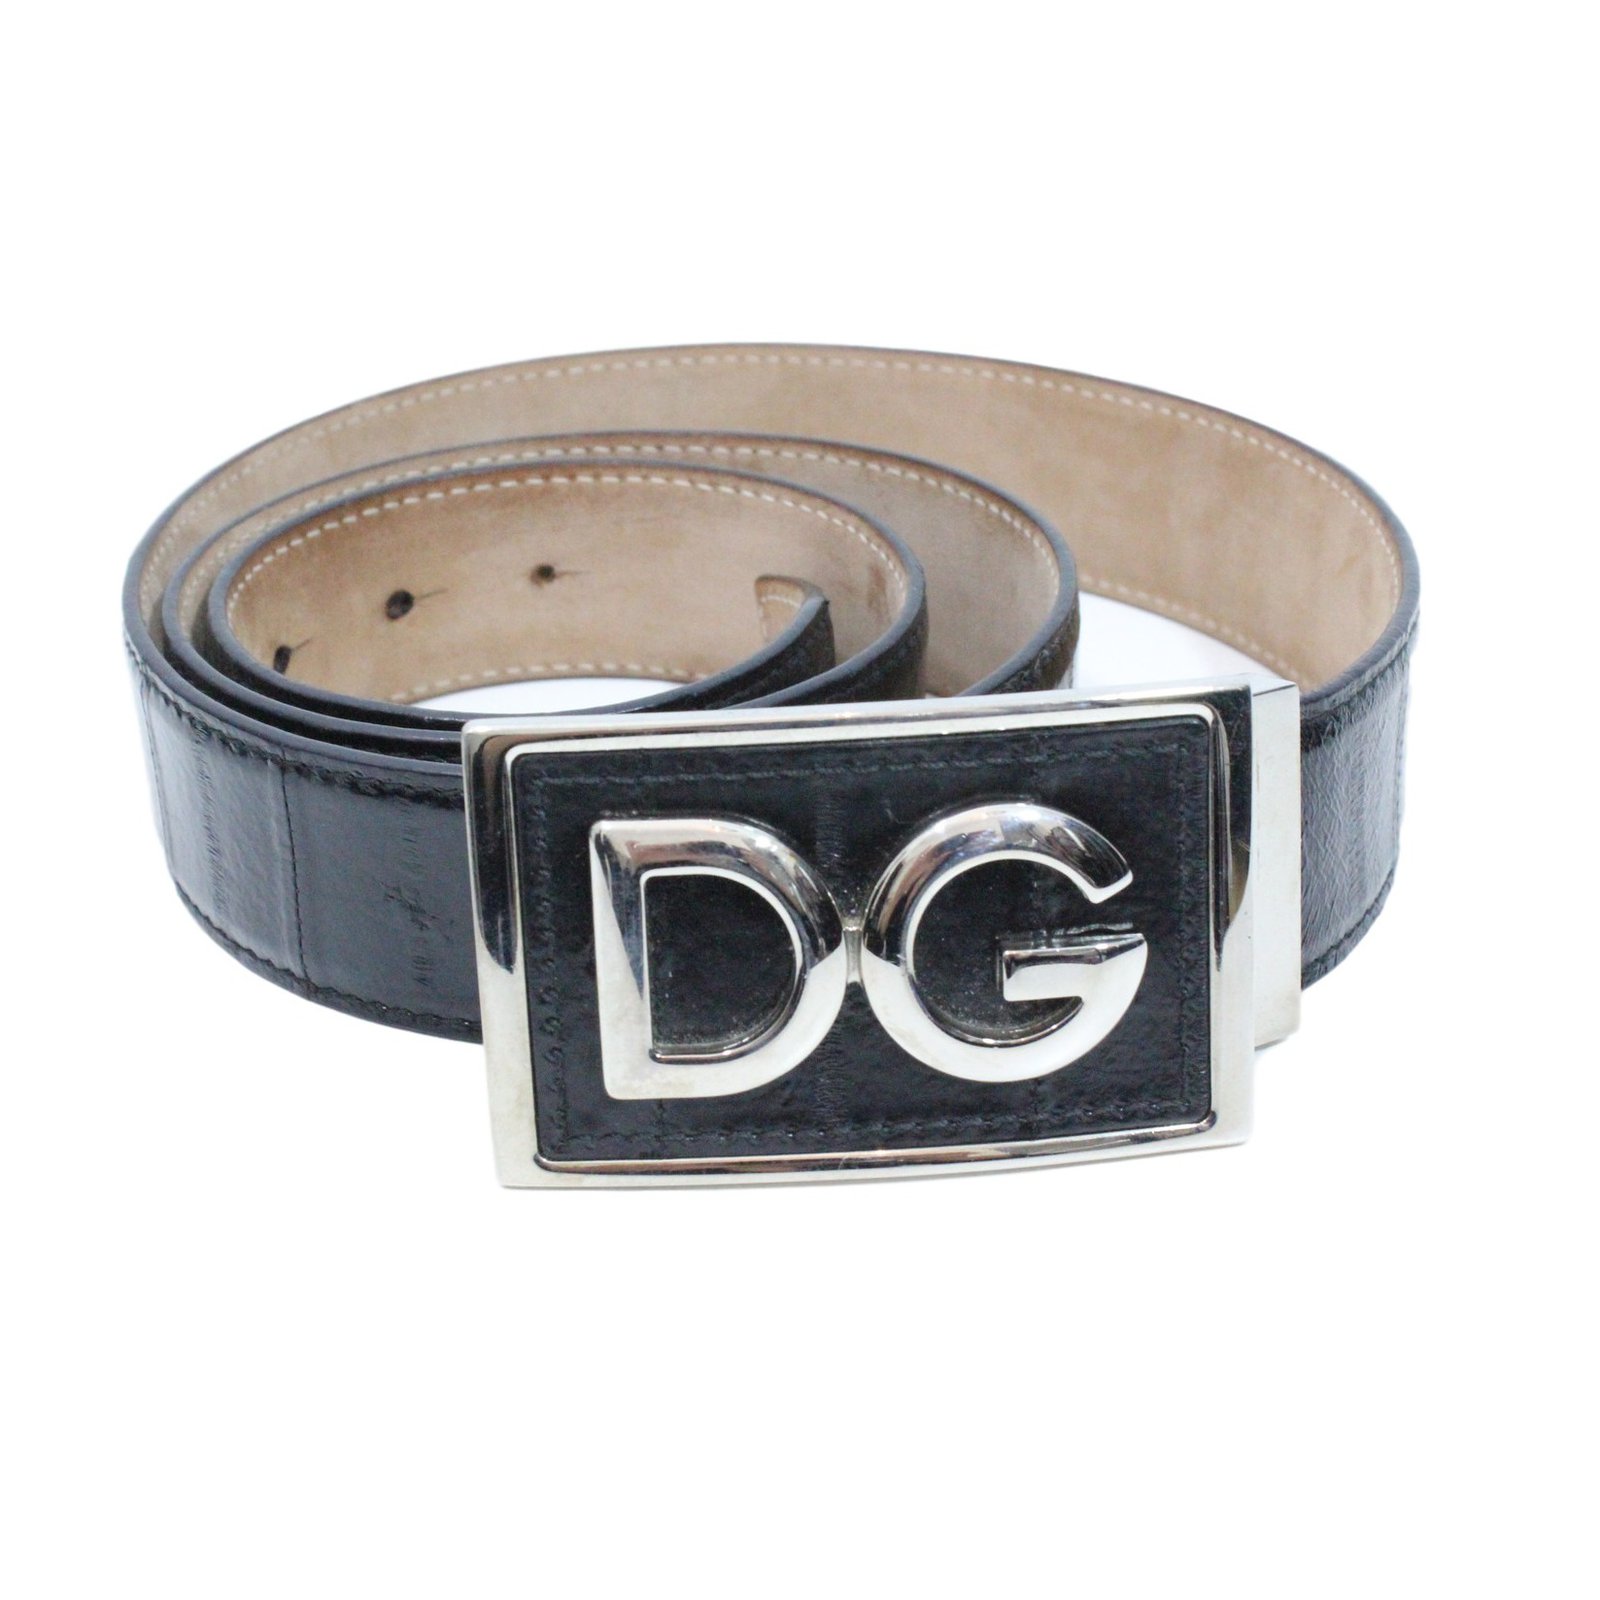 dolce & gabbana men's leather belt